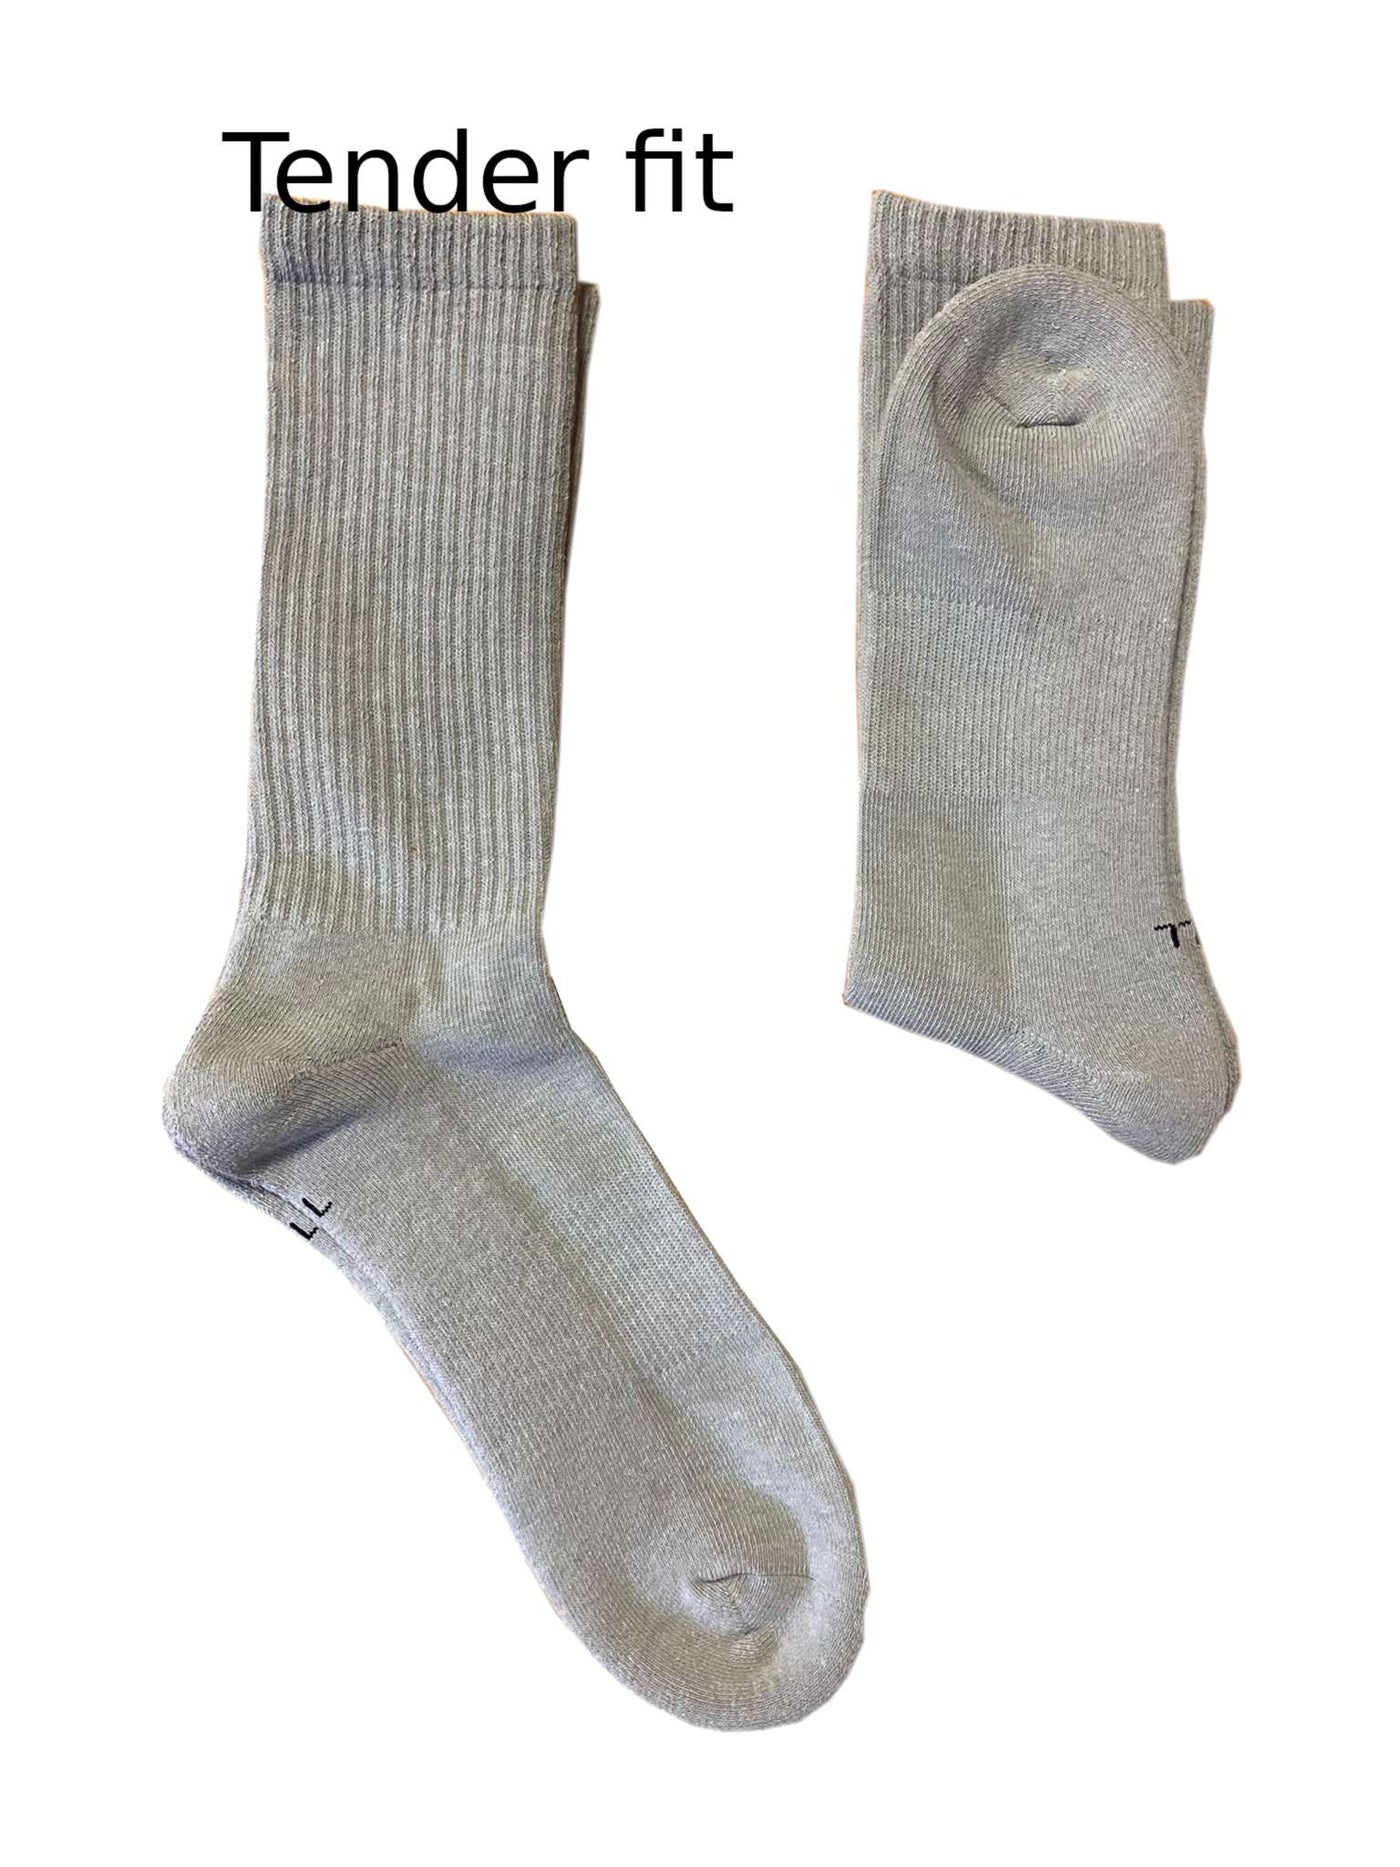 NEW GRAPHENE Far Infrared Socks for Treating Peripheral Neuropathy.